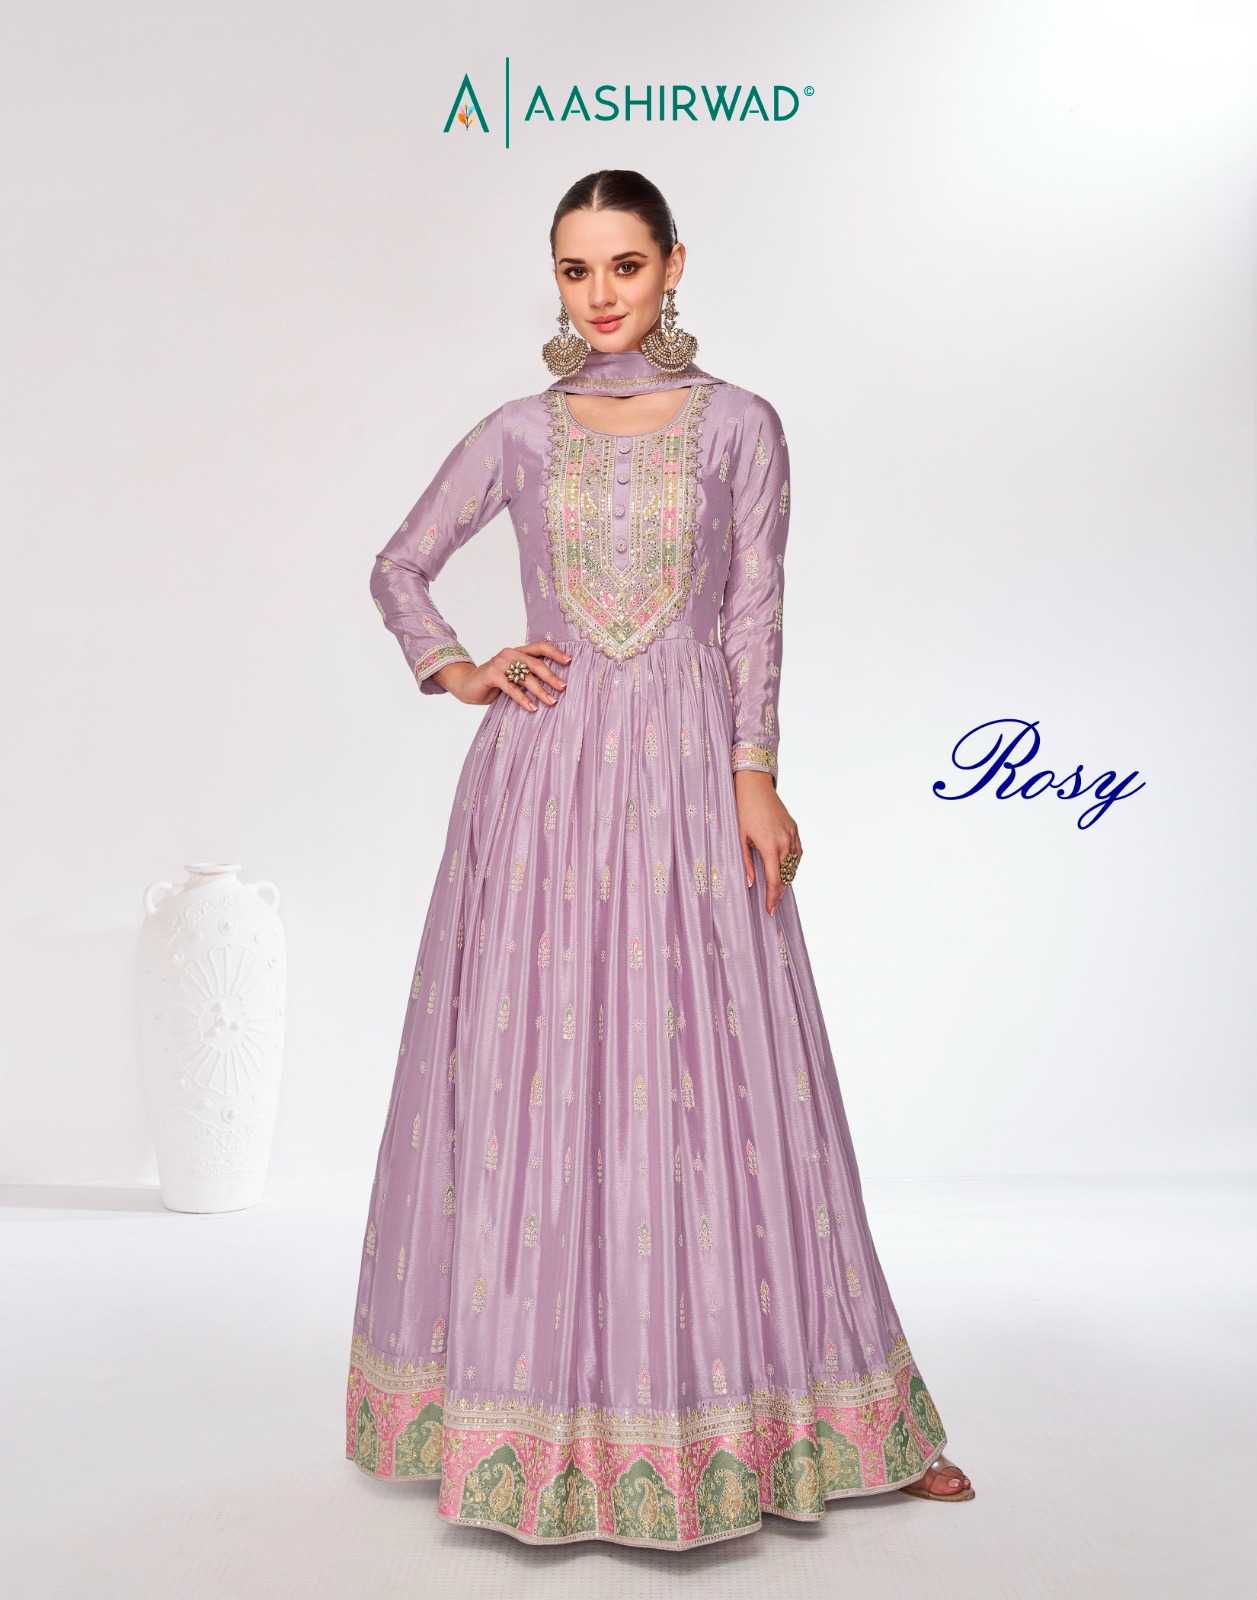 aashirwad creation rosy fancy chinnon wedding style fancy full stitch top plazzo with dupatta